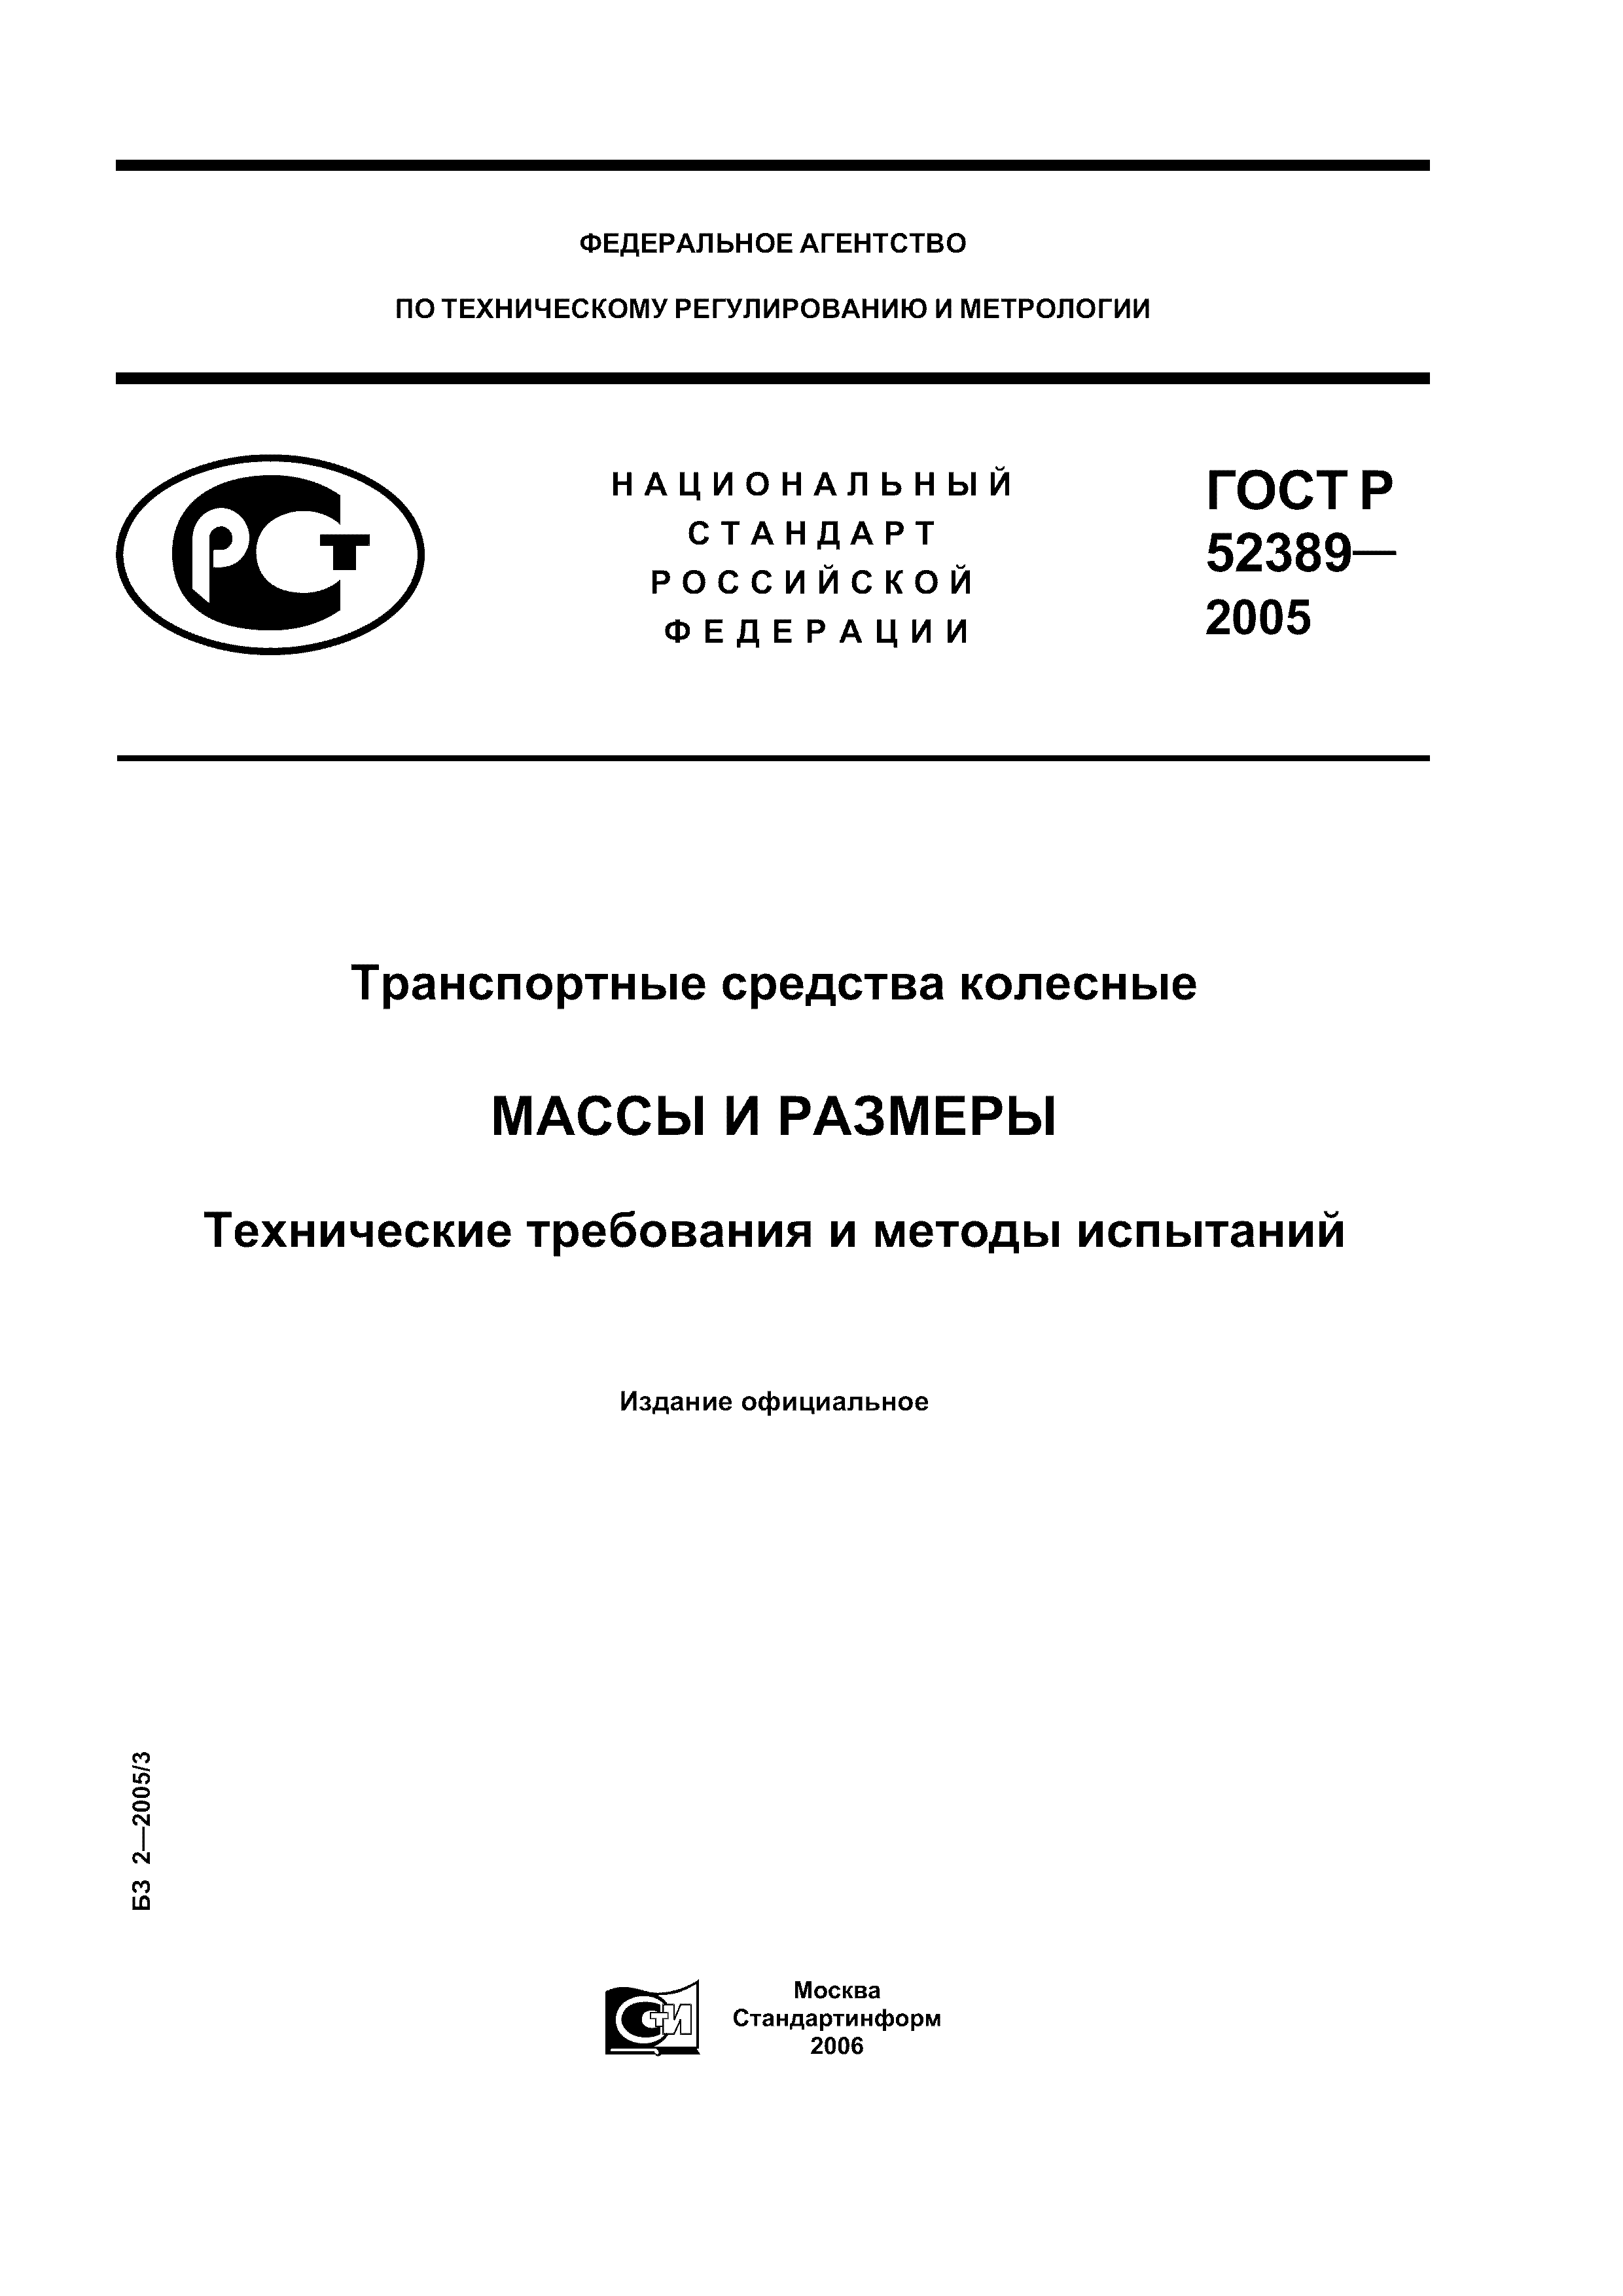 ГОСТ Р 52389-2005